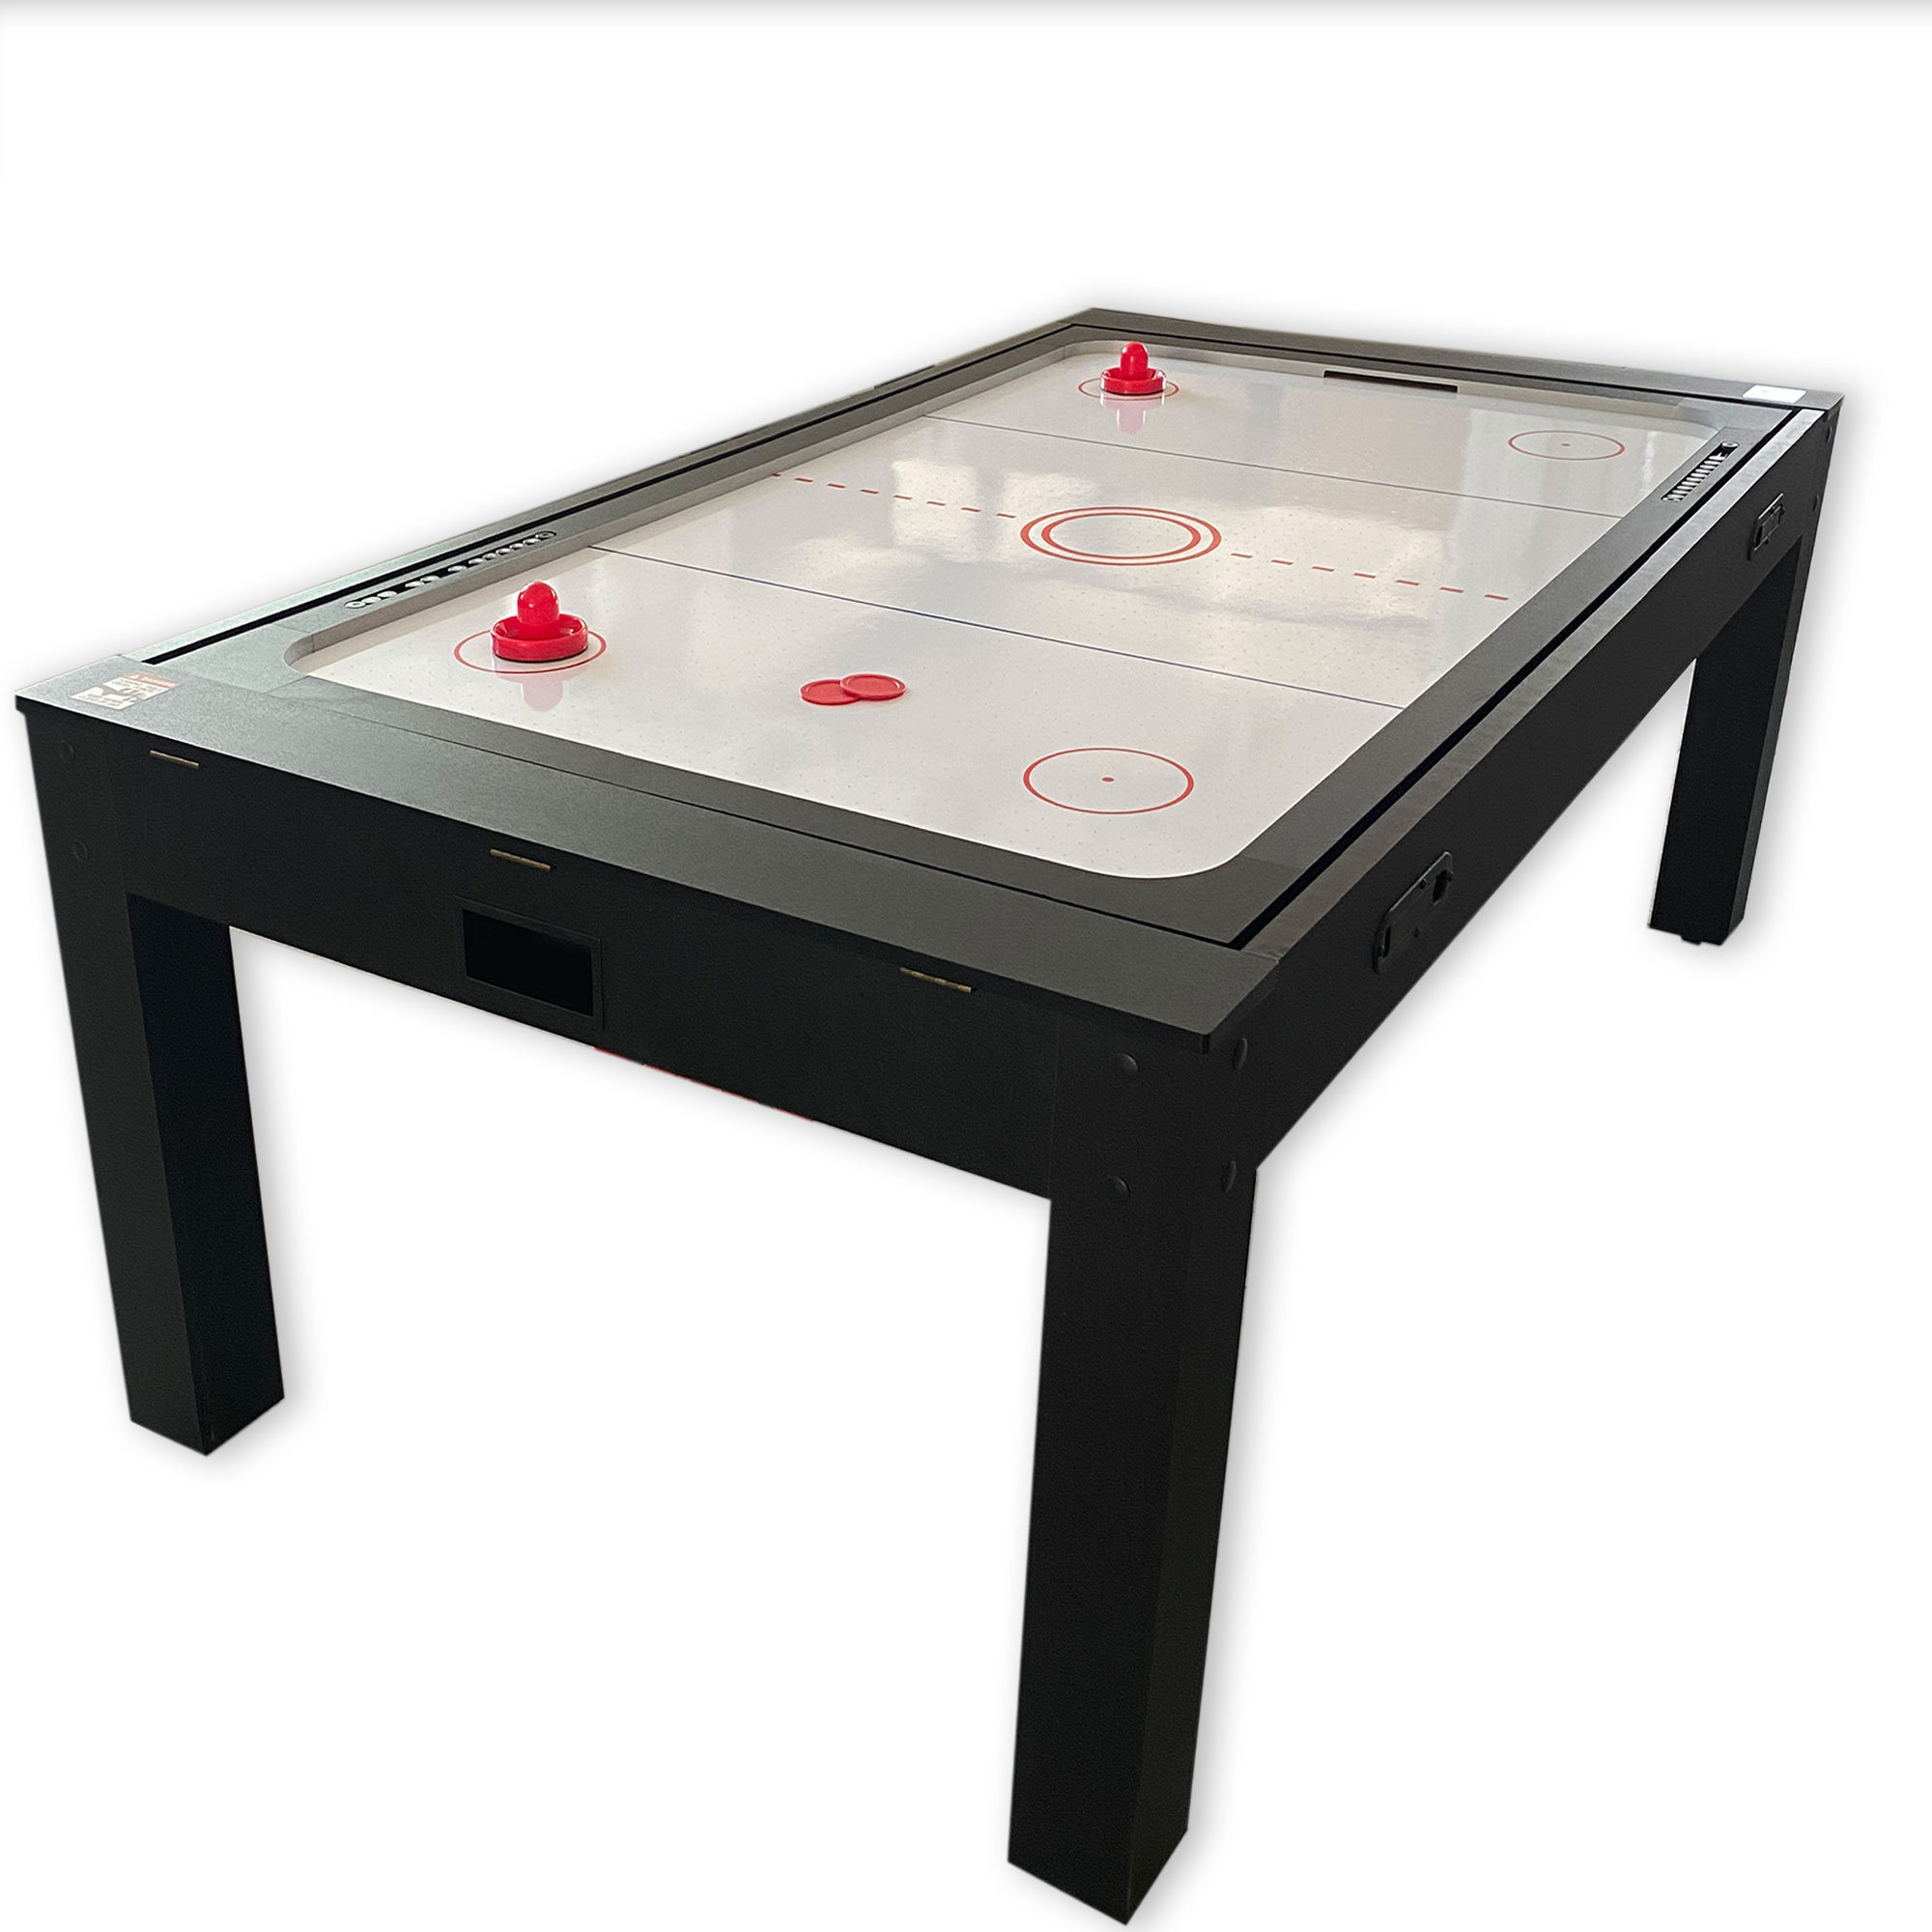 Fat Cat Original 3-in-1 Green 7' Pockey™ Multi-Game Table – Pro Pool Store